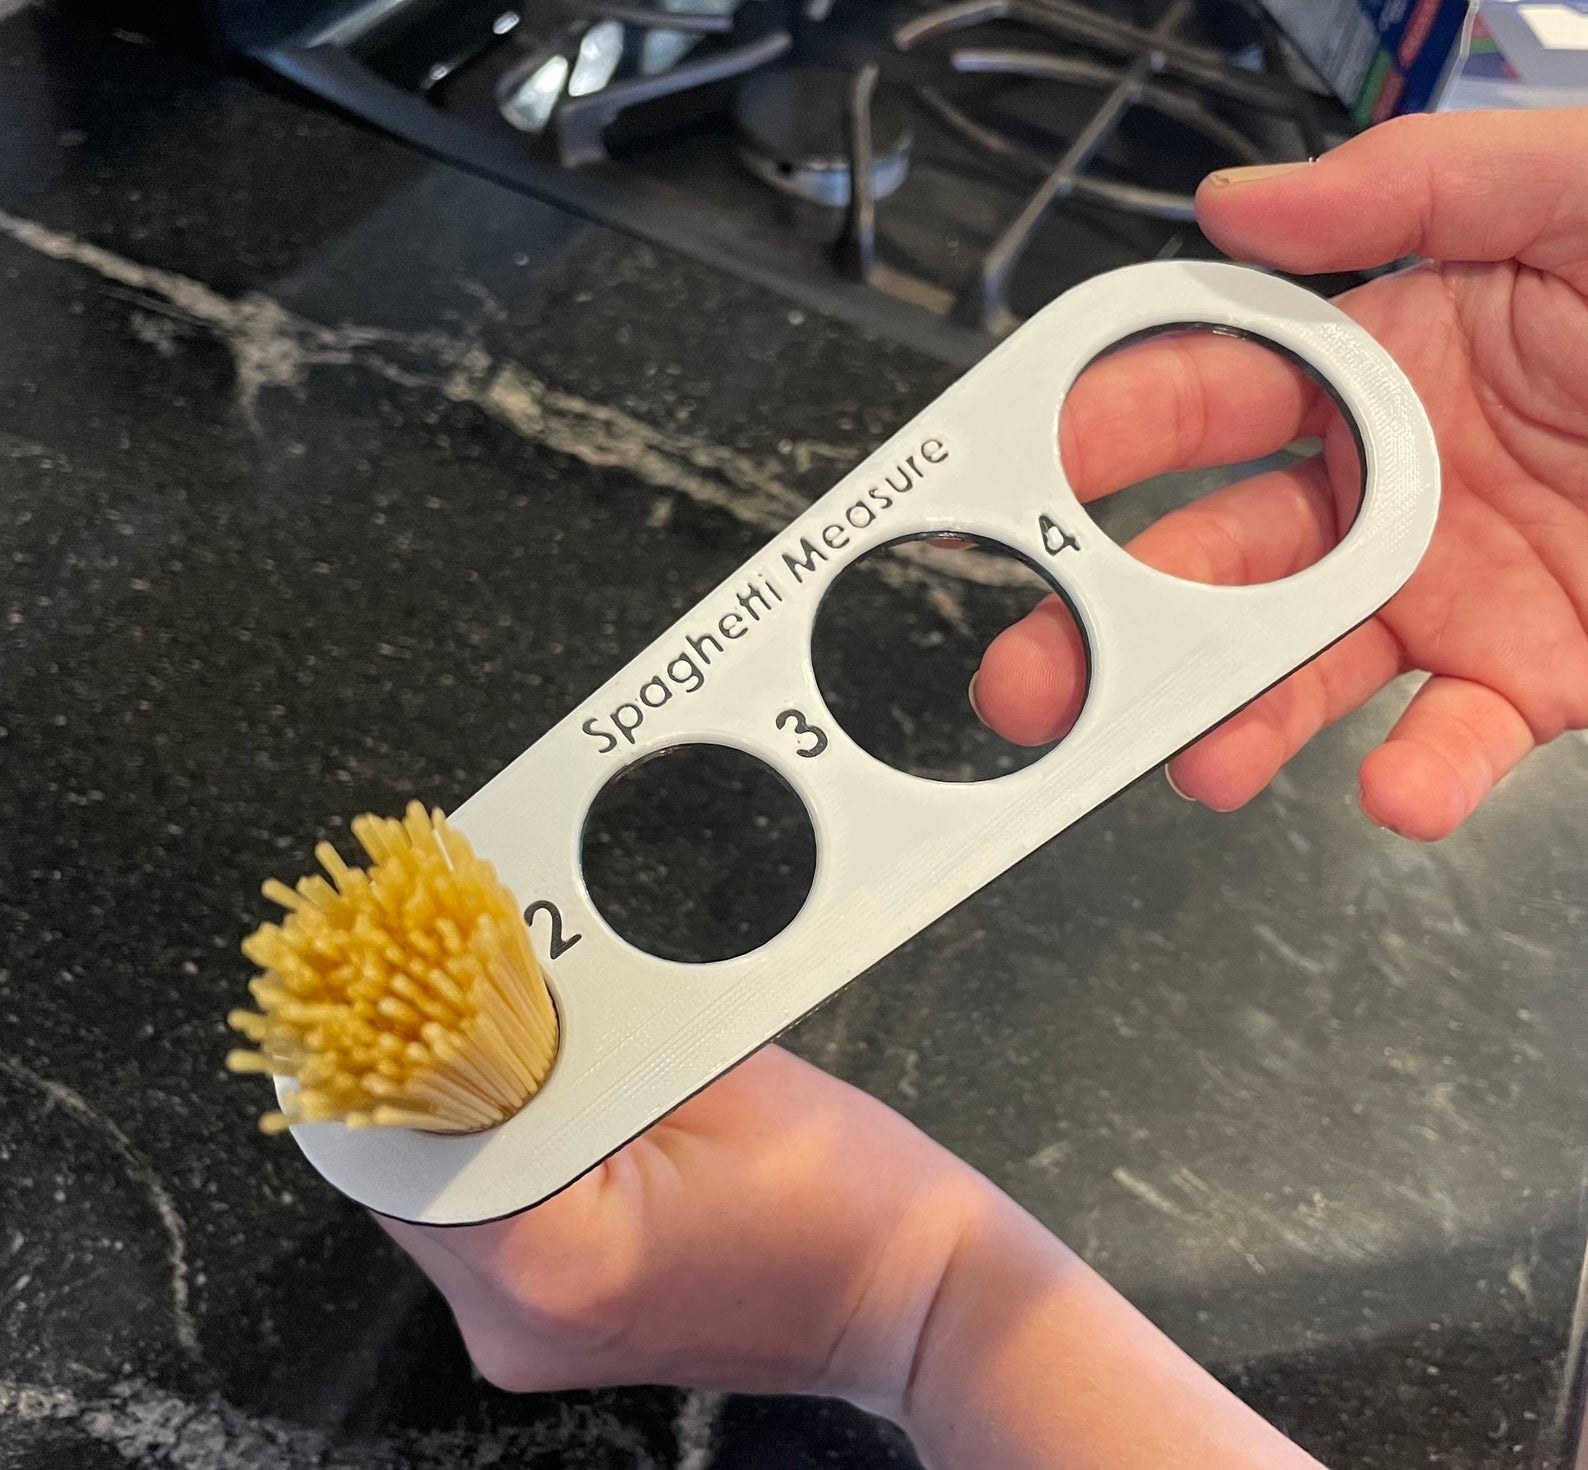 A person holding pasta inside the spaghetti measure